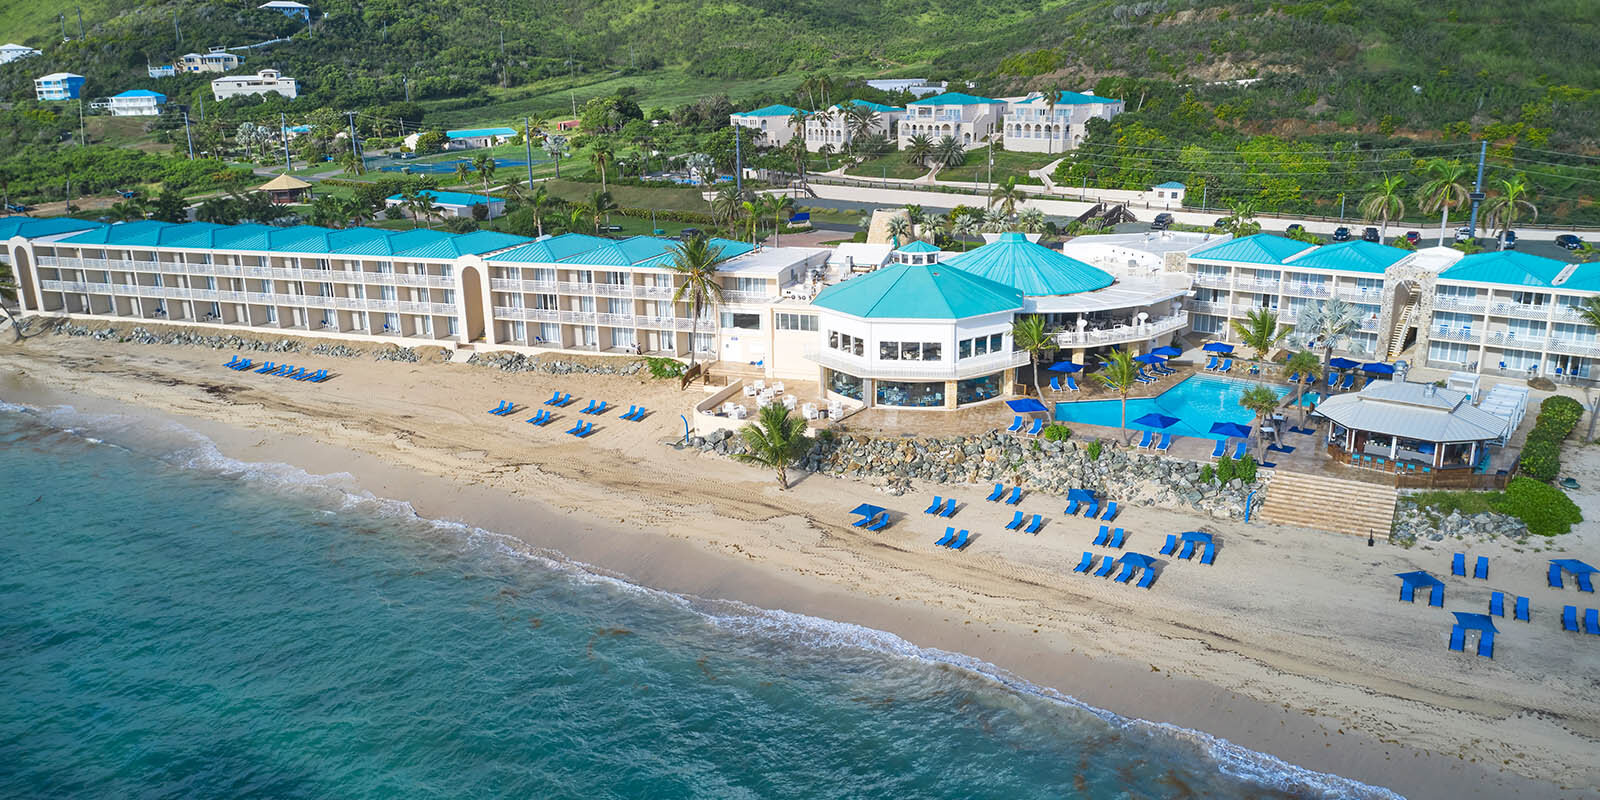 Divi Carina Bay Beach Resort and Casino Virgin Island Resorts pic